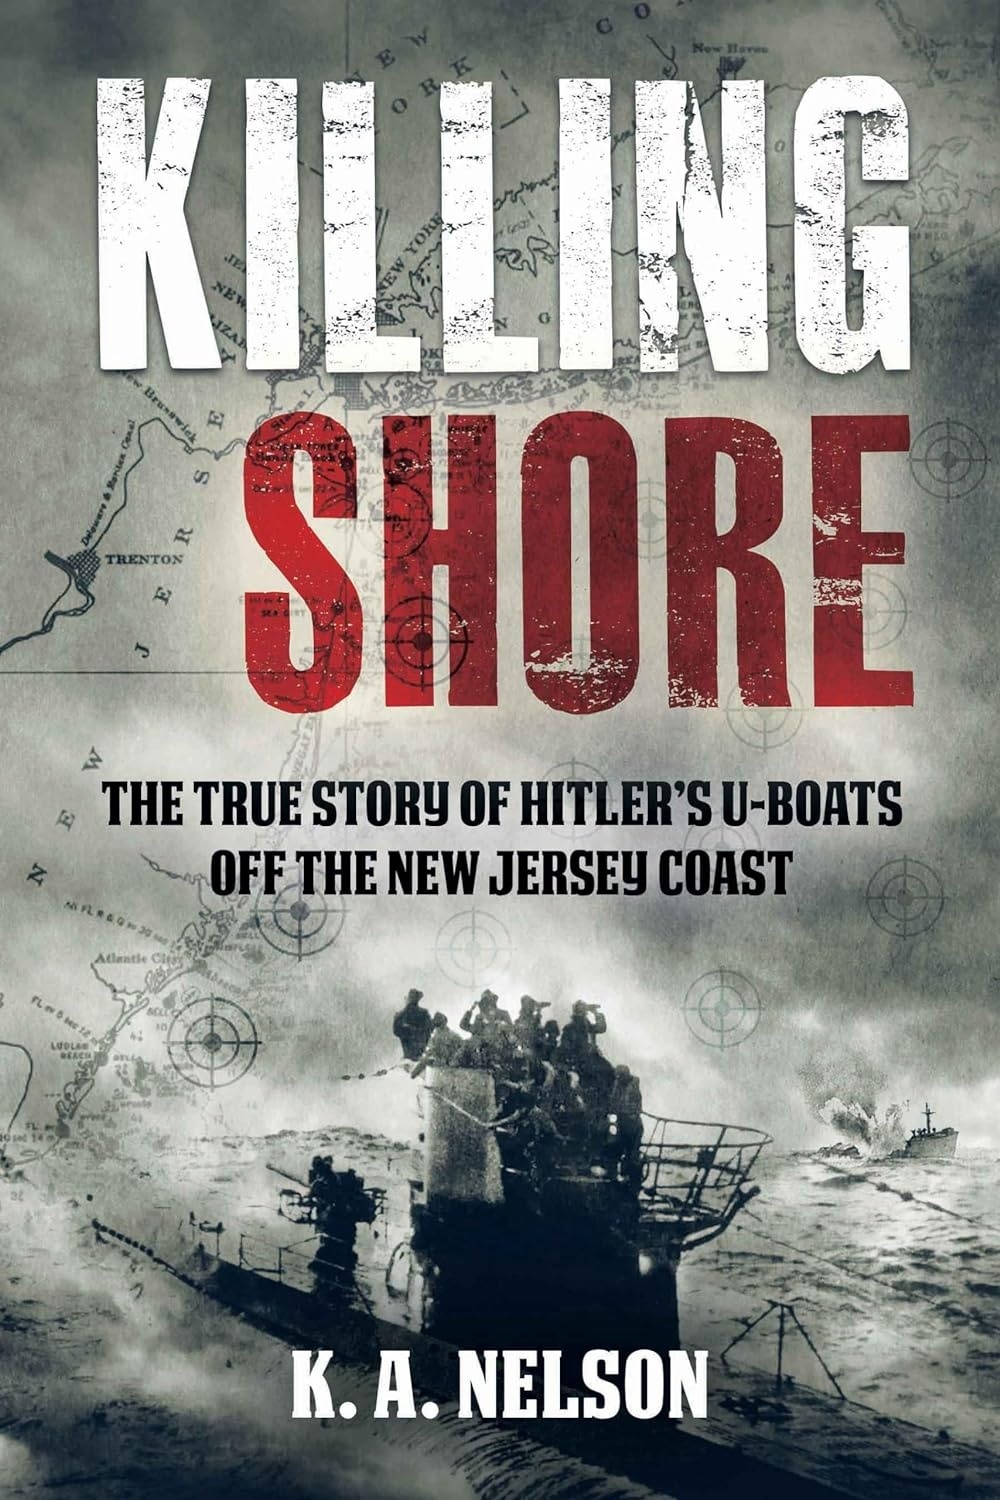 Killing Shore "The True Story of Hitler's U-Boats off the New Jersey Coast"